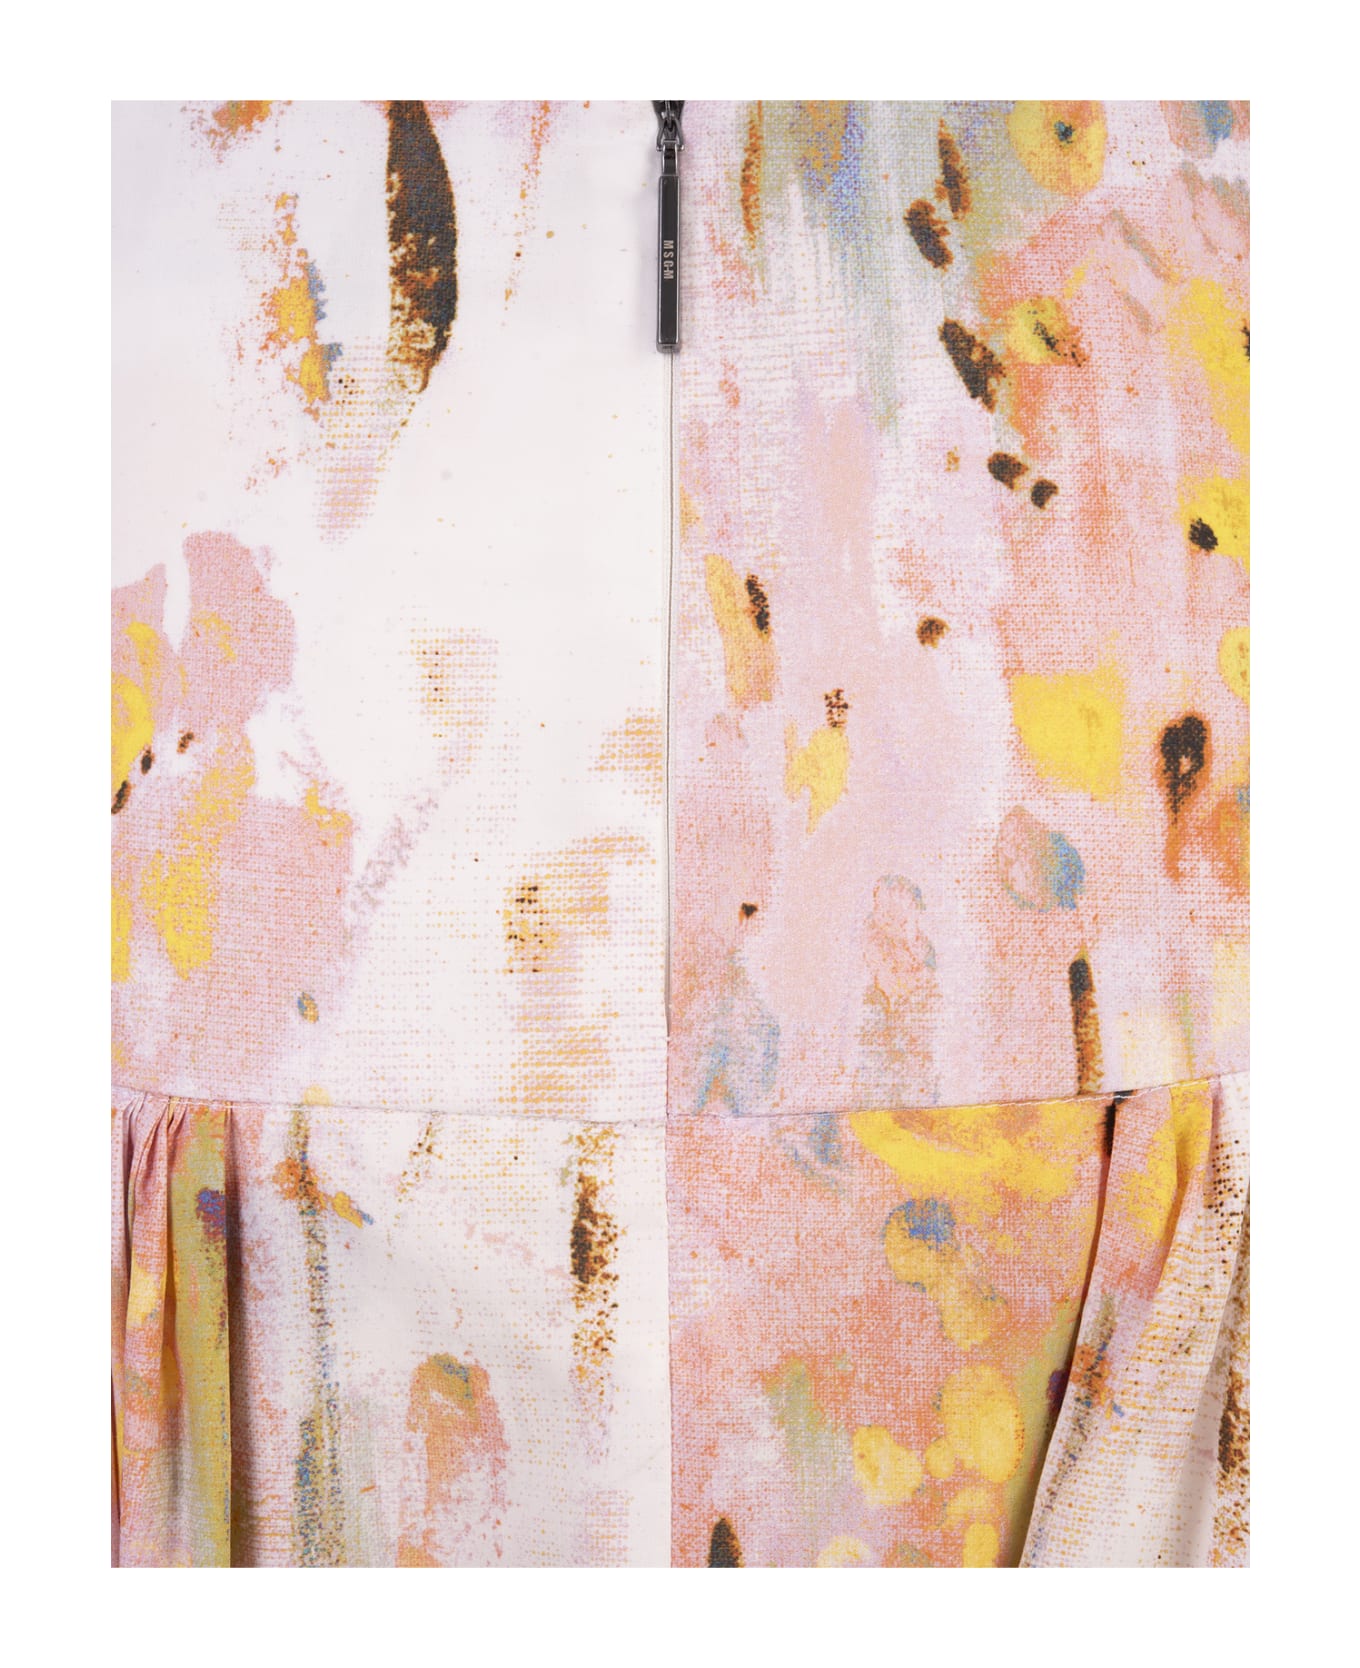 MSGM Flared Midi Skirt In Poplin With "artsy Flower" Print - Pink スカート